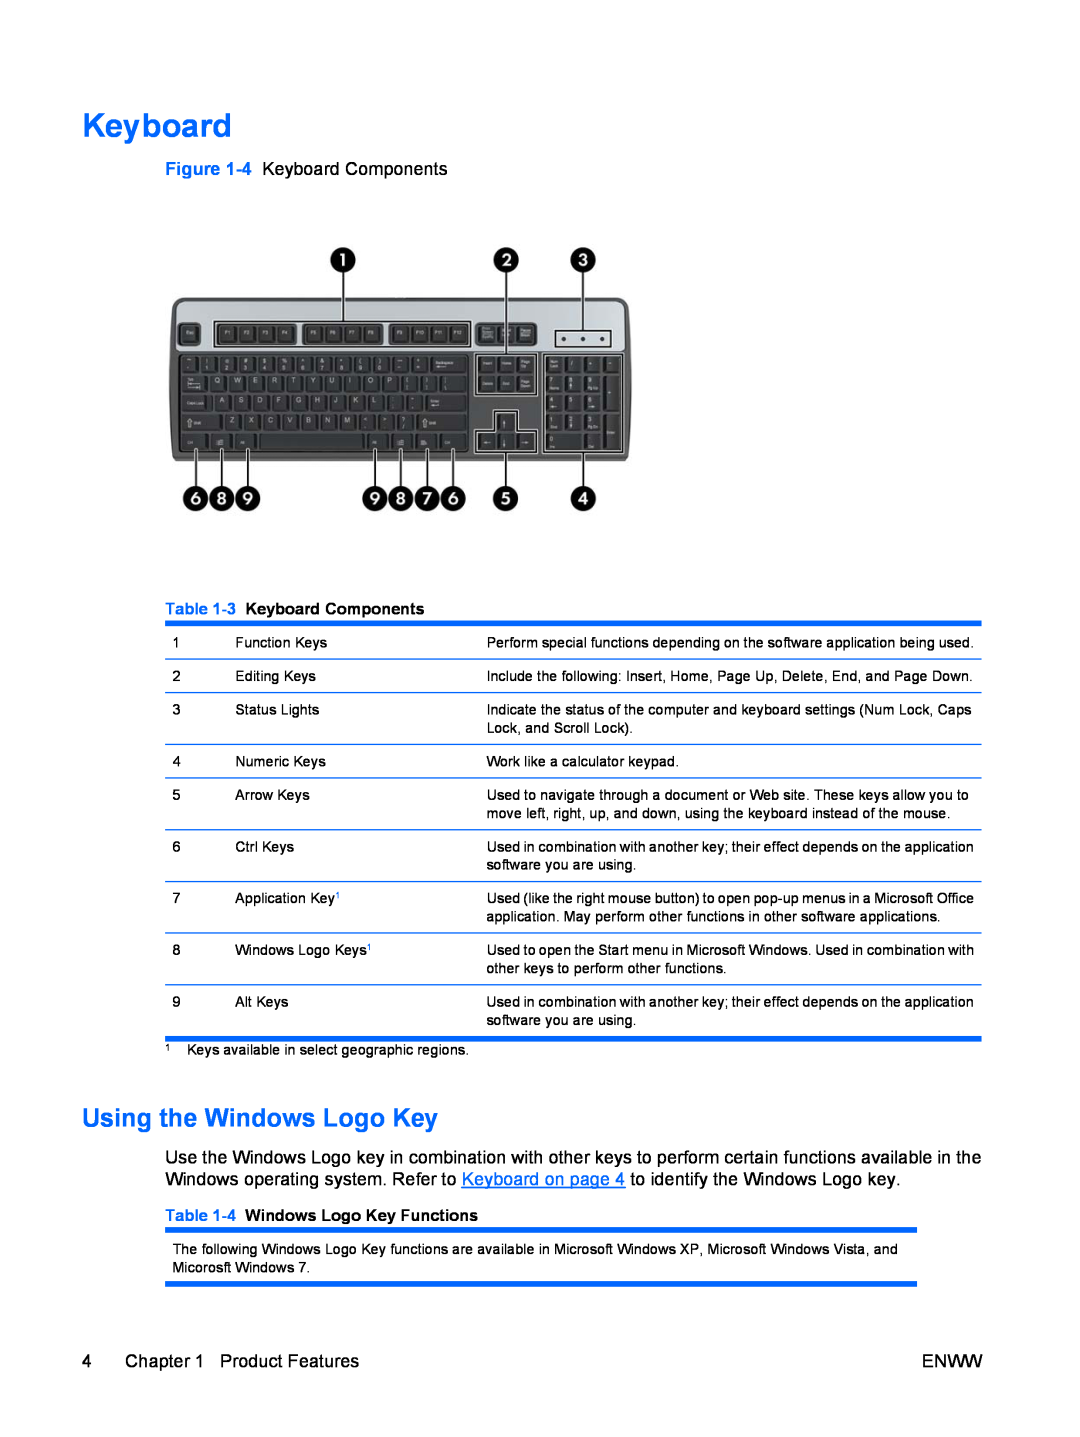 Hitachi 8000 manual Using the Windows Logo Key, 3 Keyboard Components, 4 Windows Logo Key Functions 